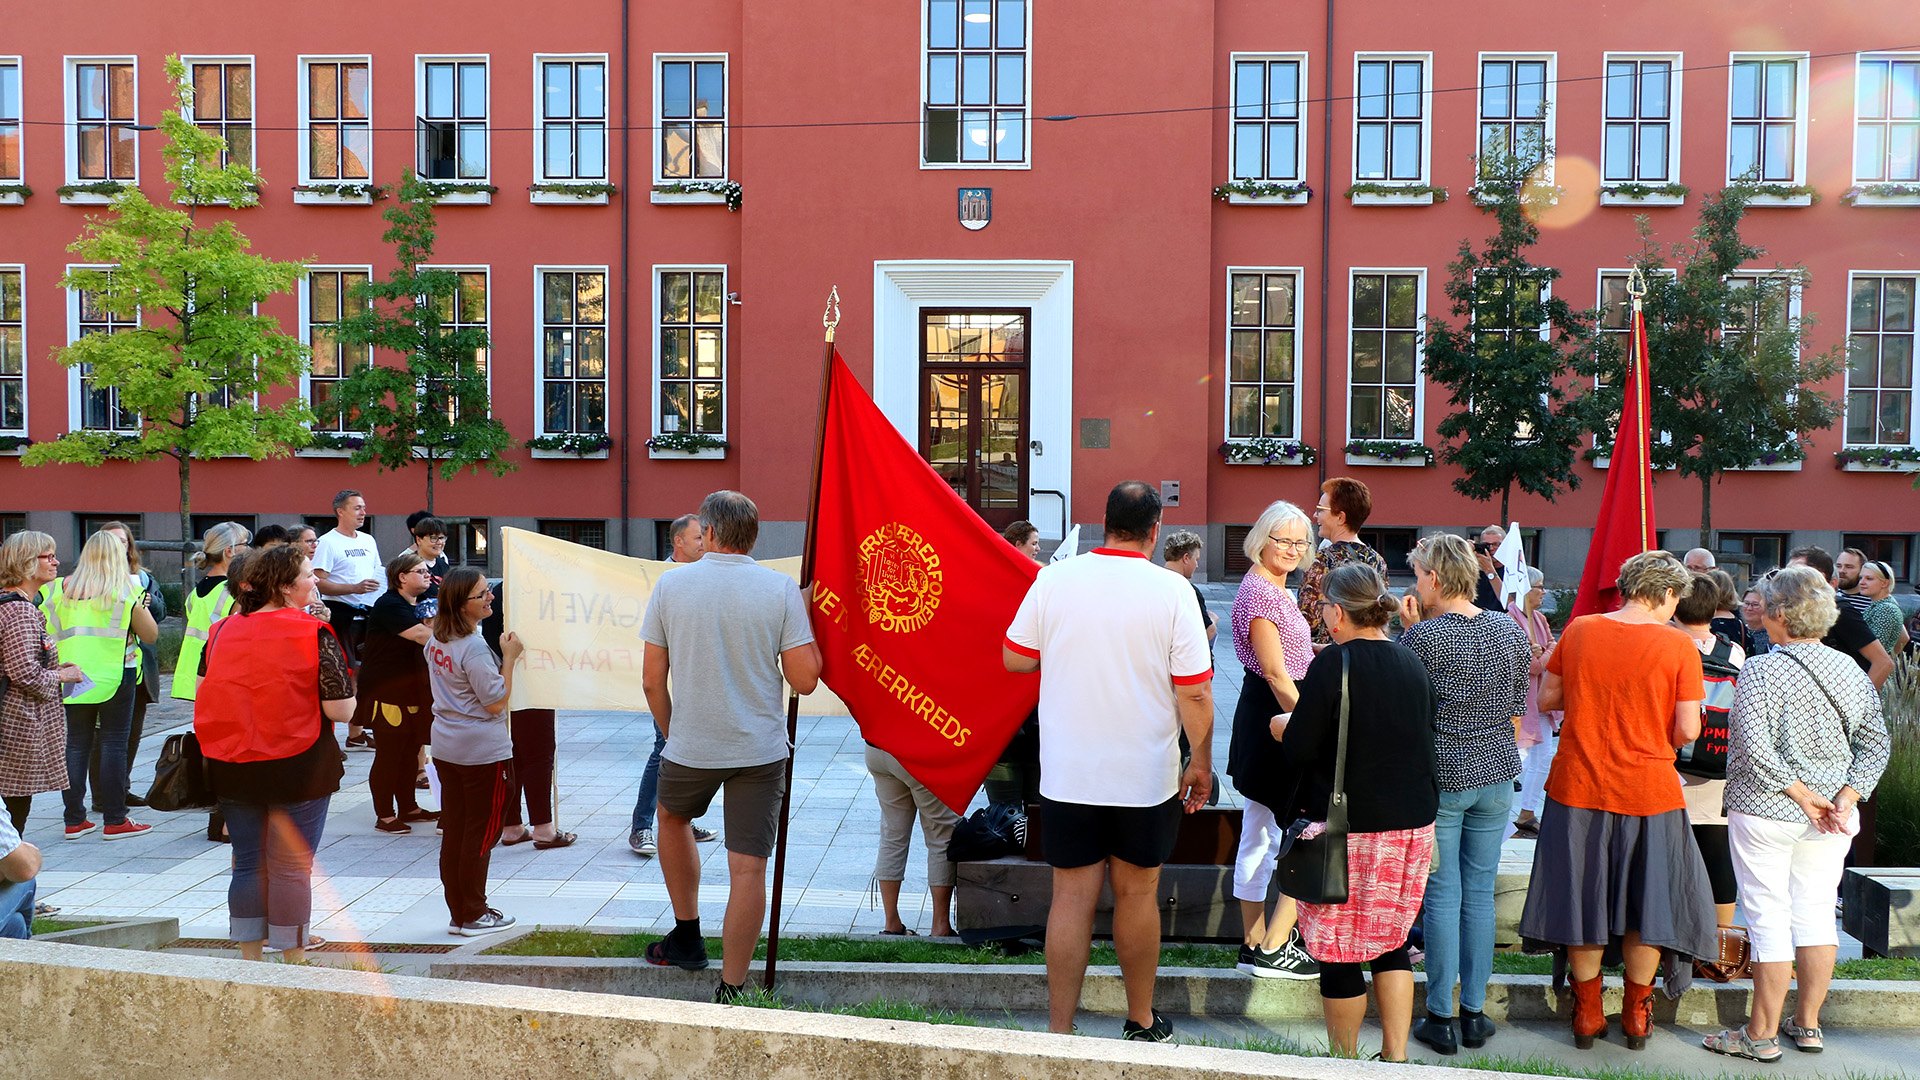 Demo foran rådhuset i Svendborg mod nedskæringer